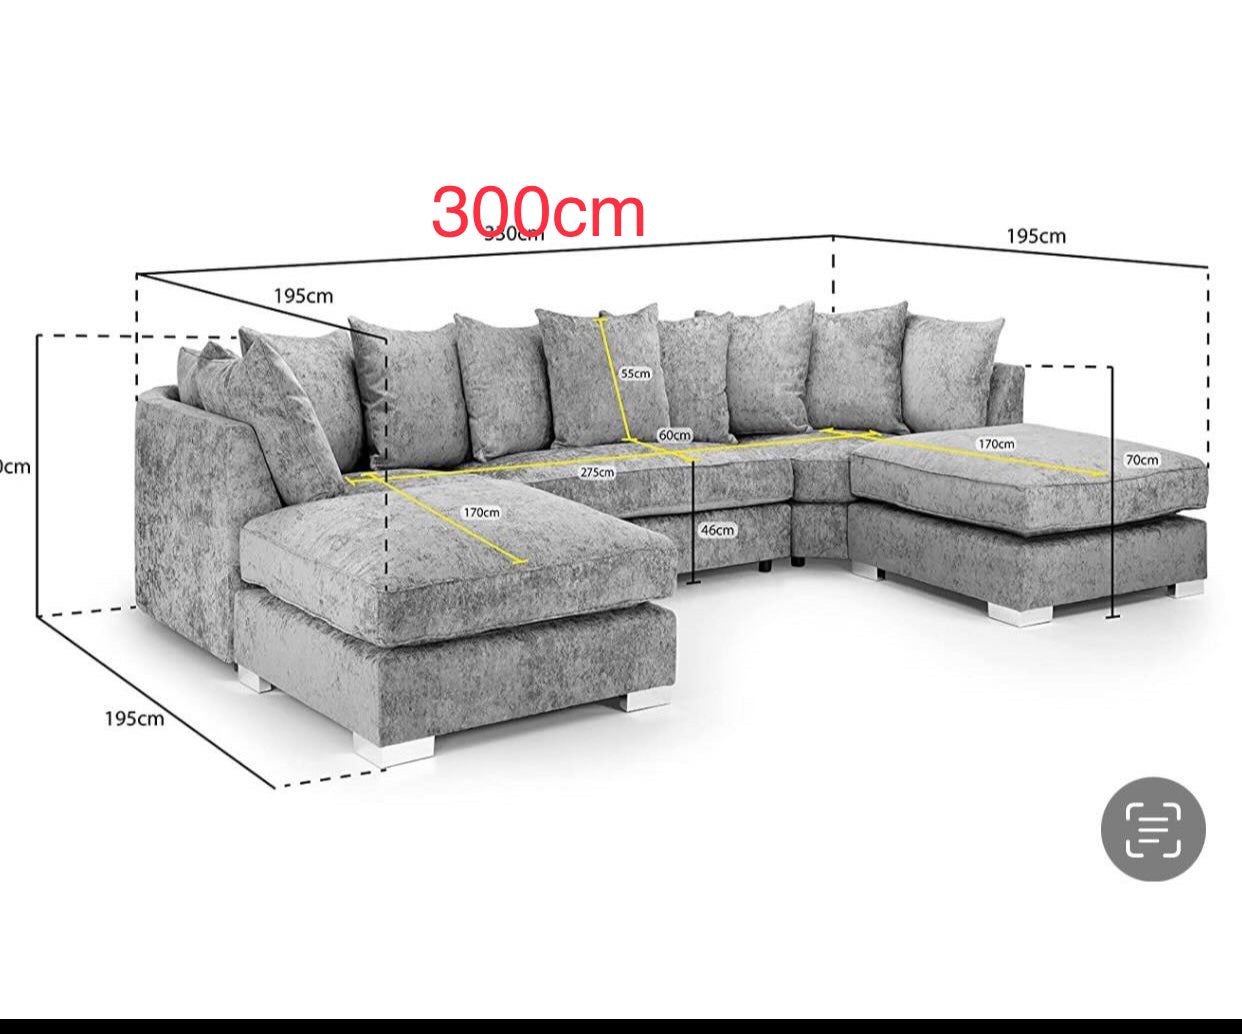 U shape corner sofa high back (grey)